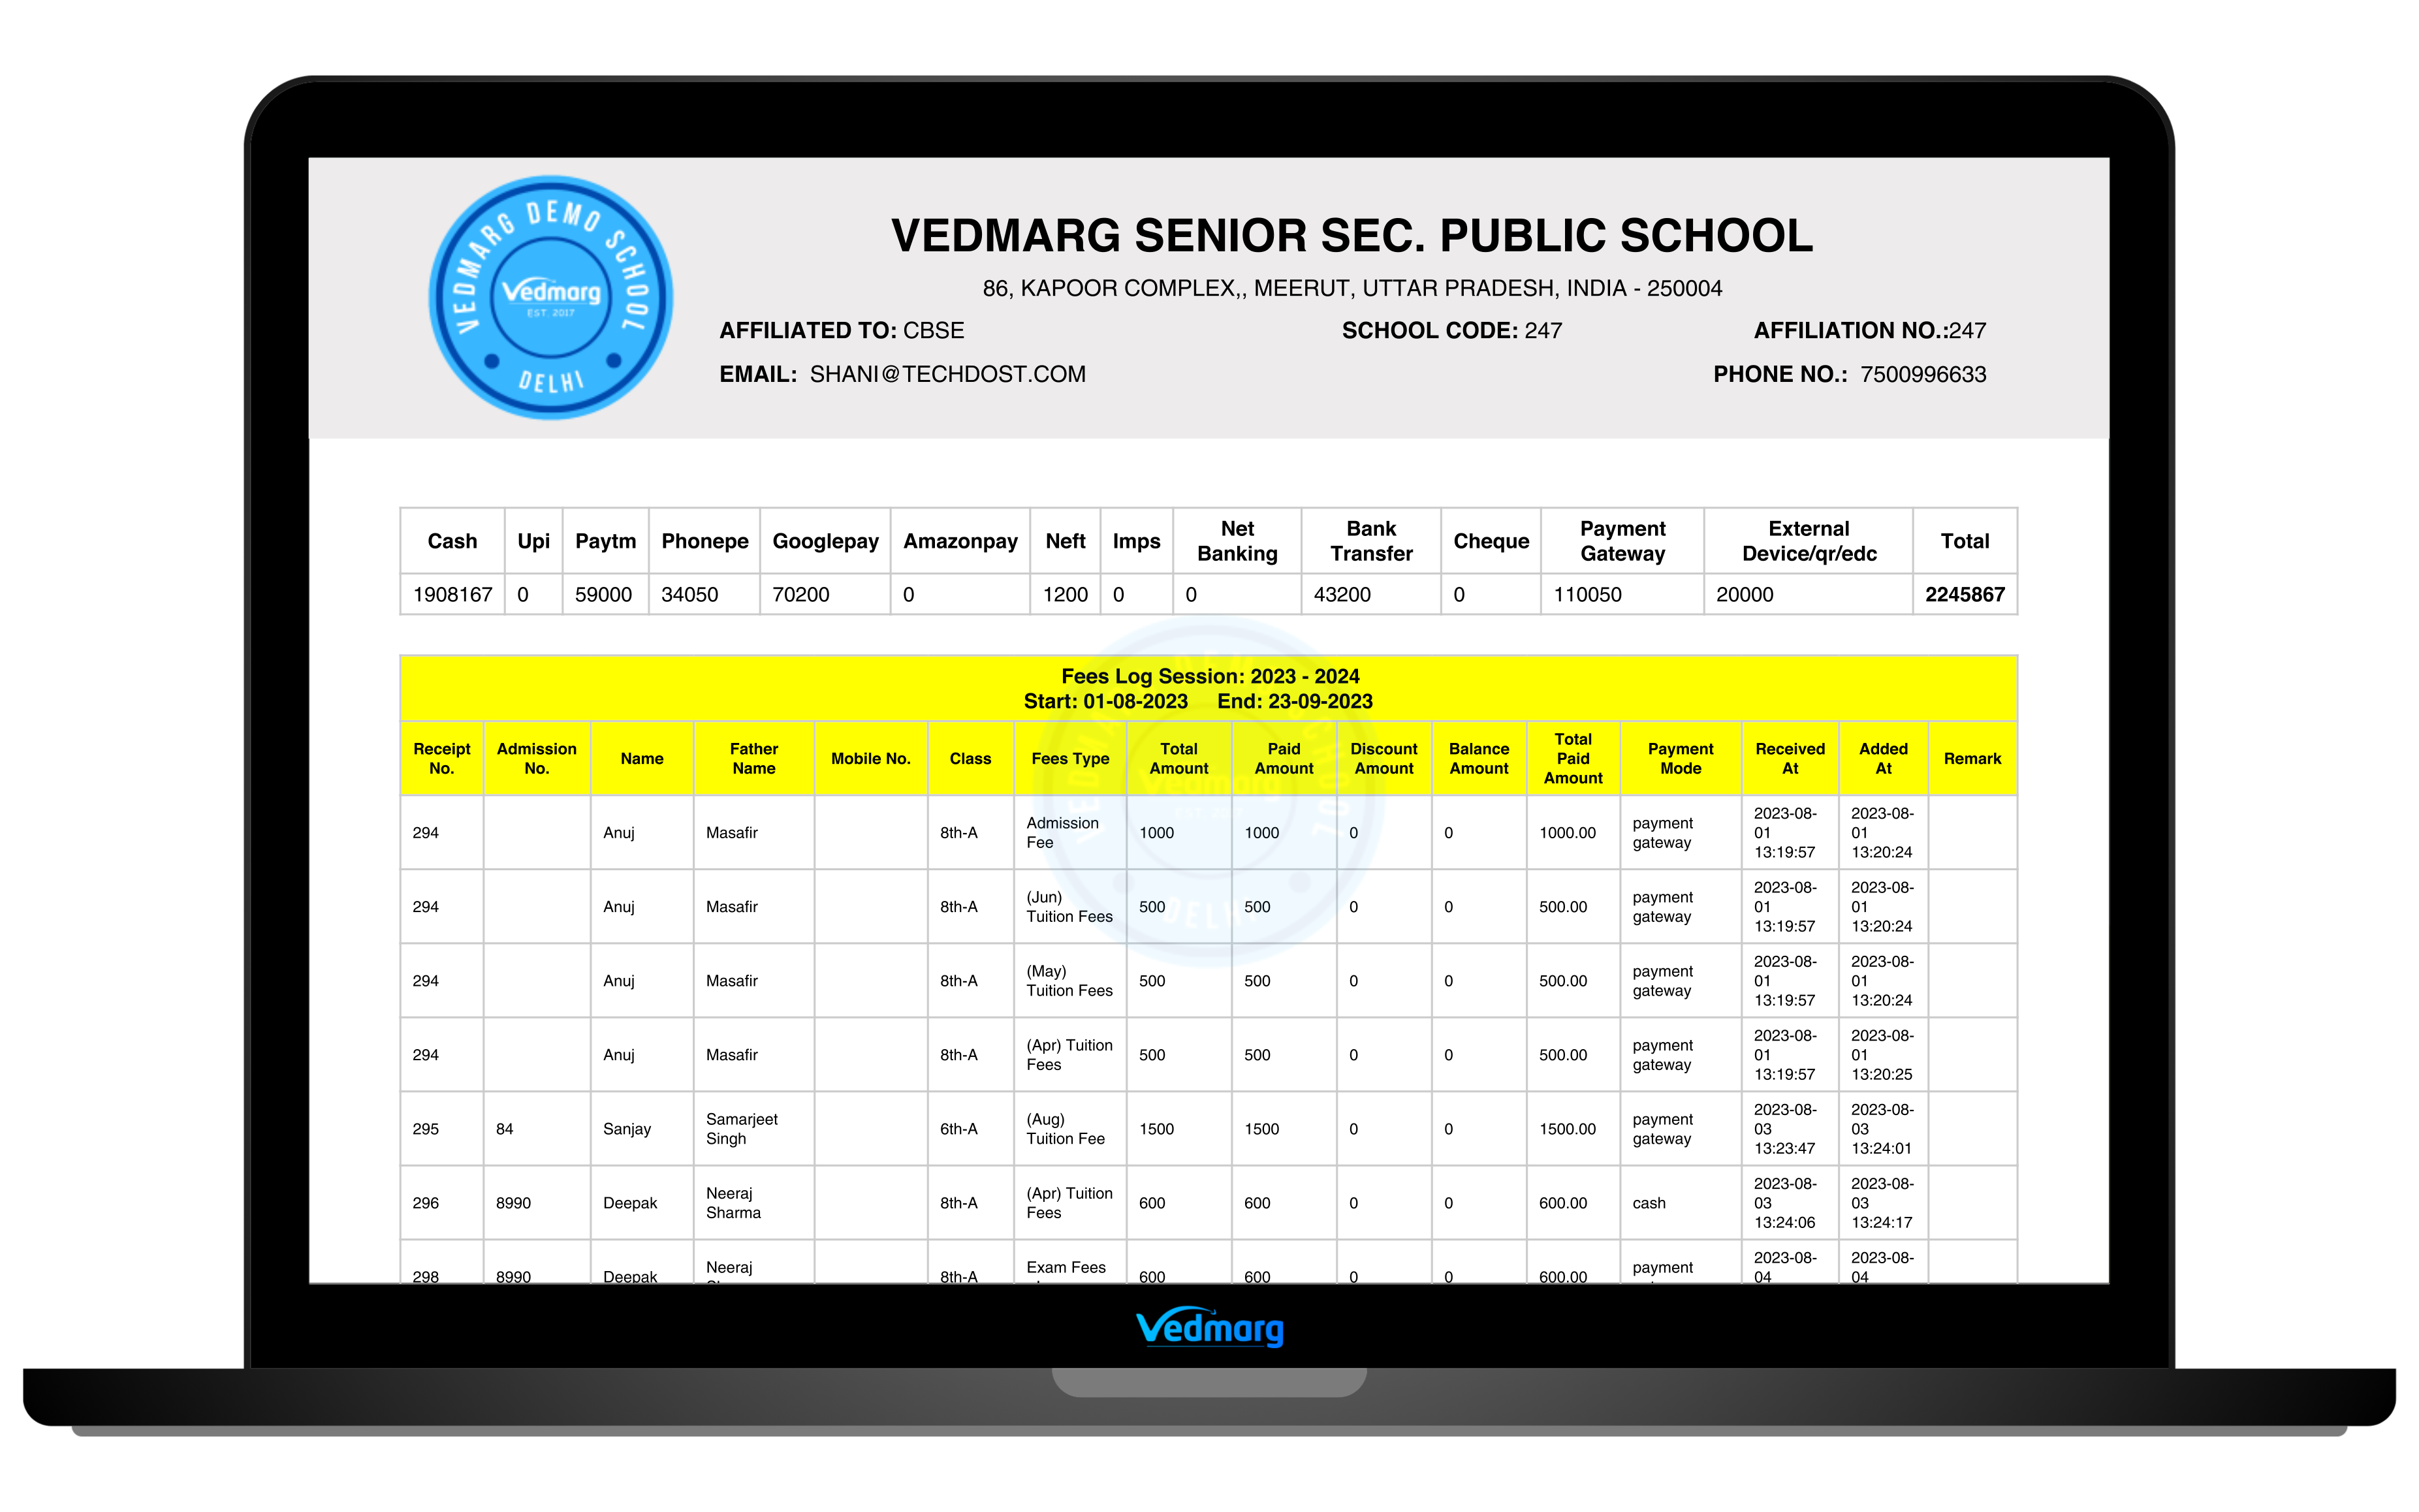 fee log session school management system - School Management Software in Muzaffarnagar - Free Mobile Apps